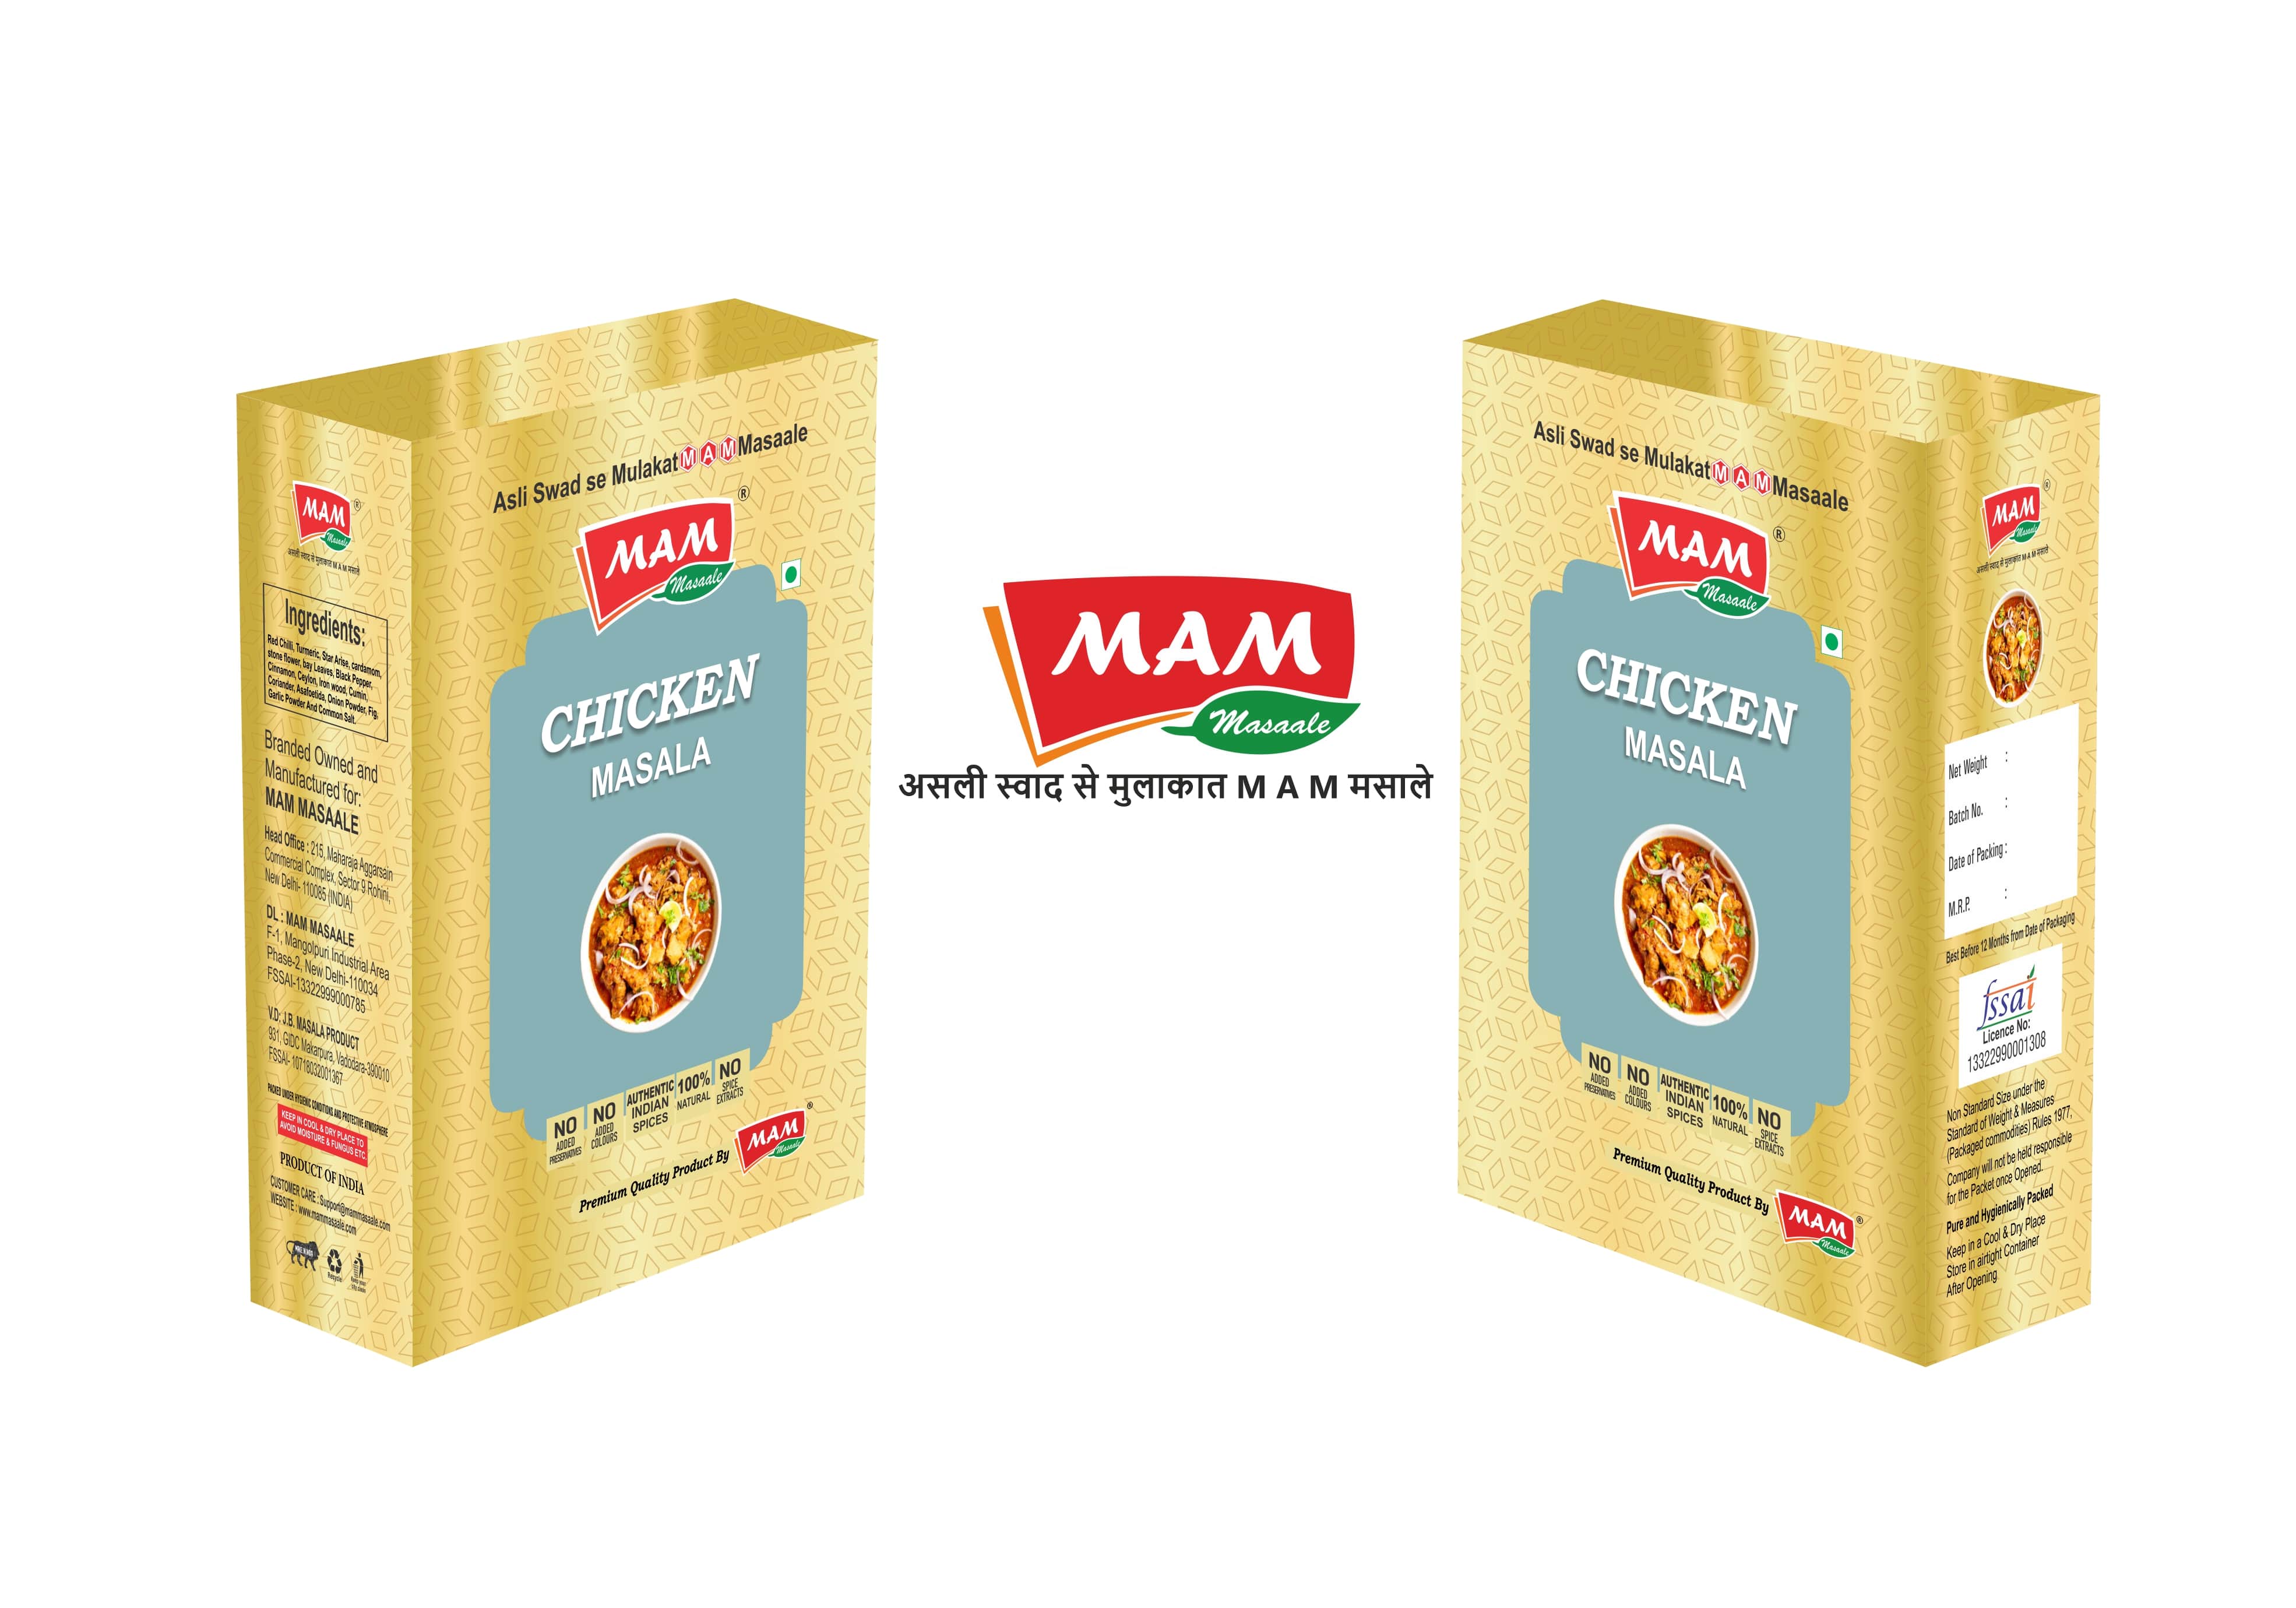 Chicken Masala | Spice India | Spice Manufacturer in Delhi - Mammasaale